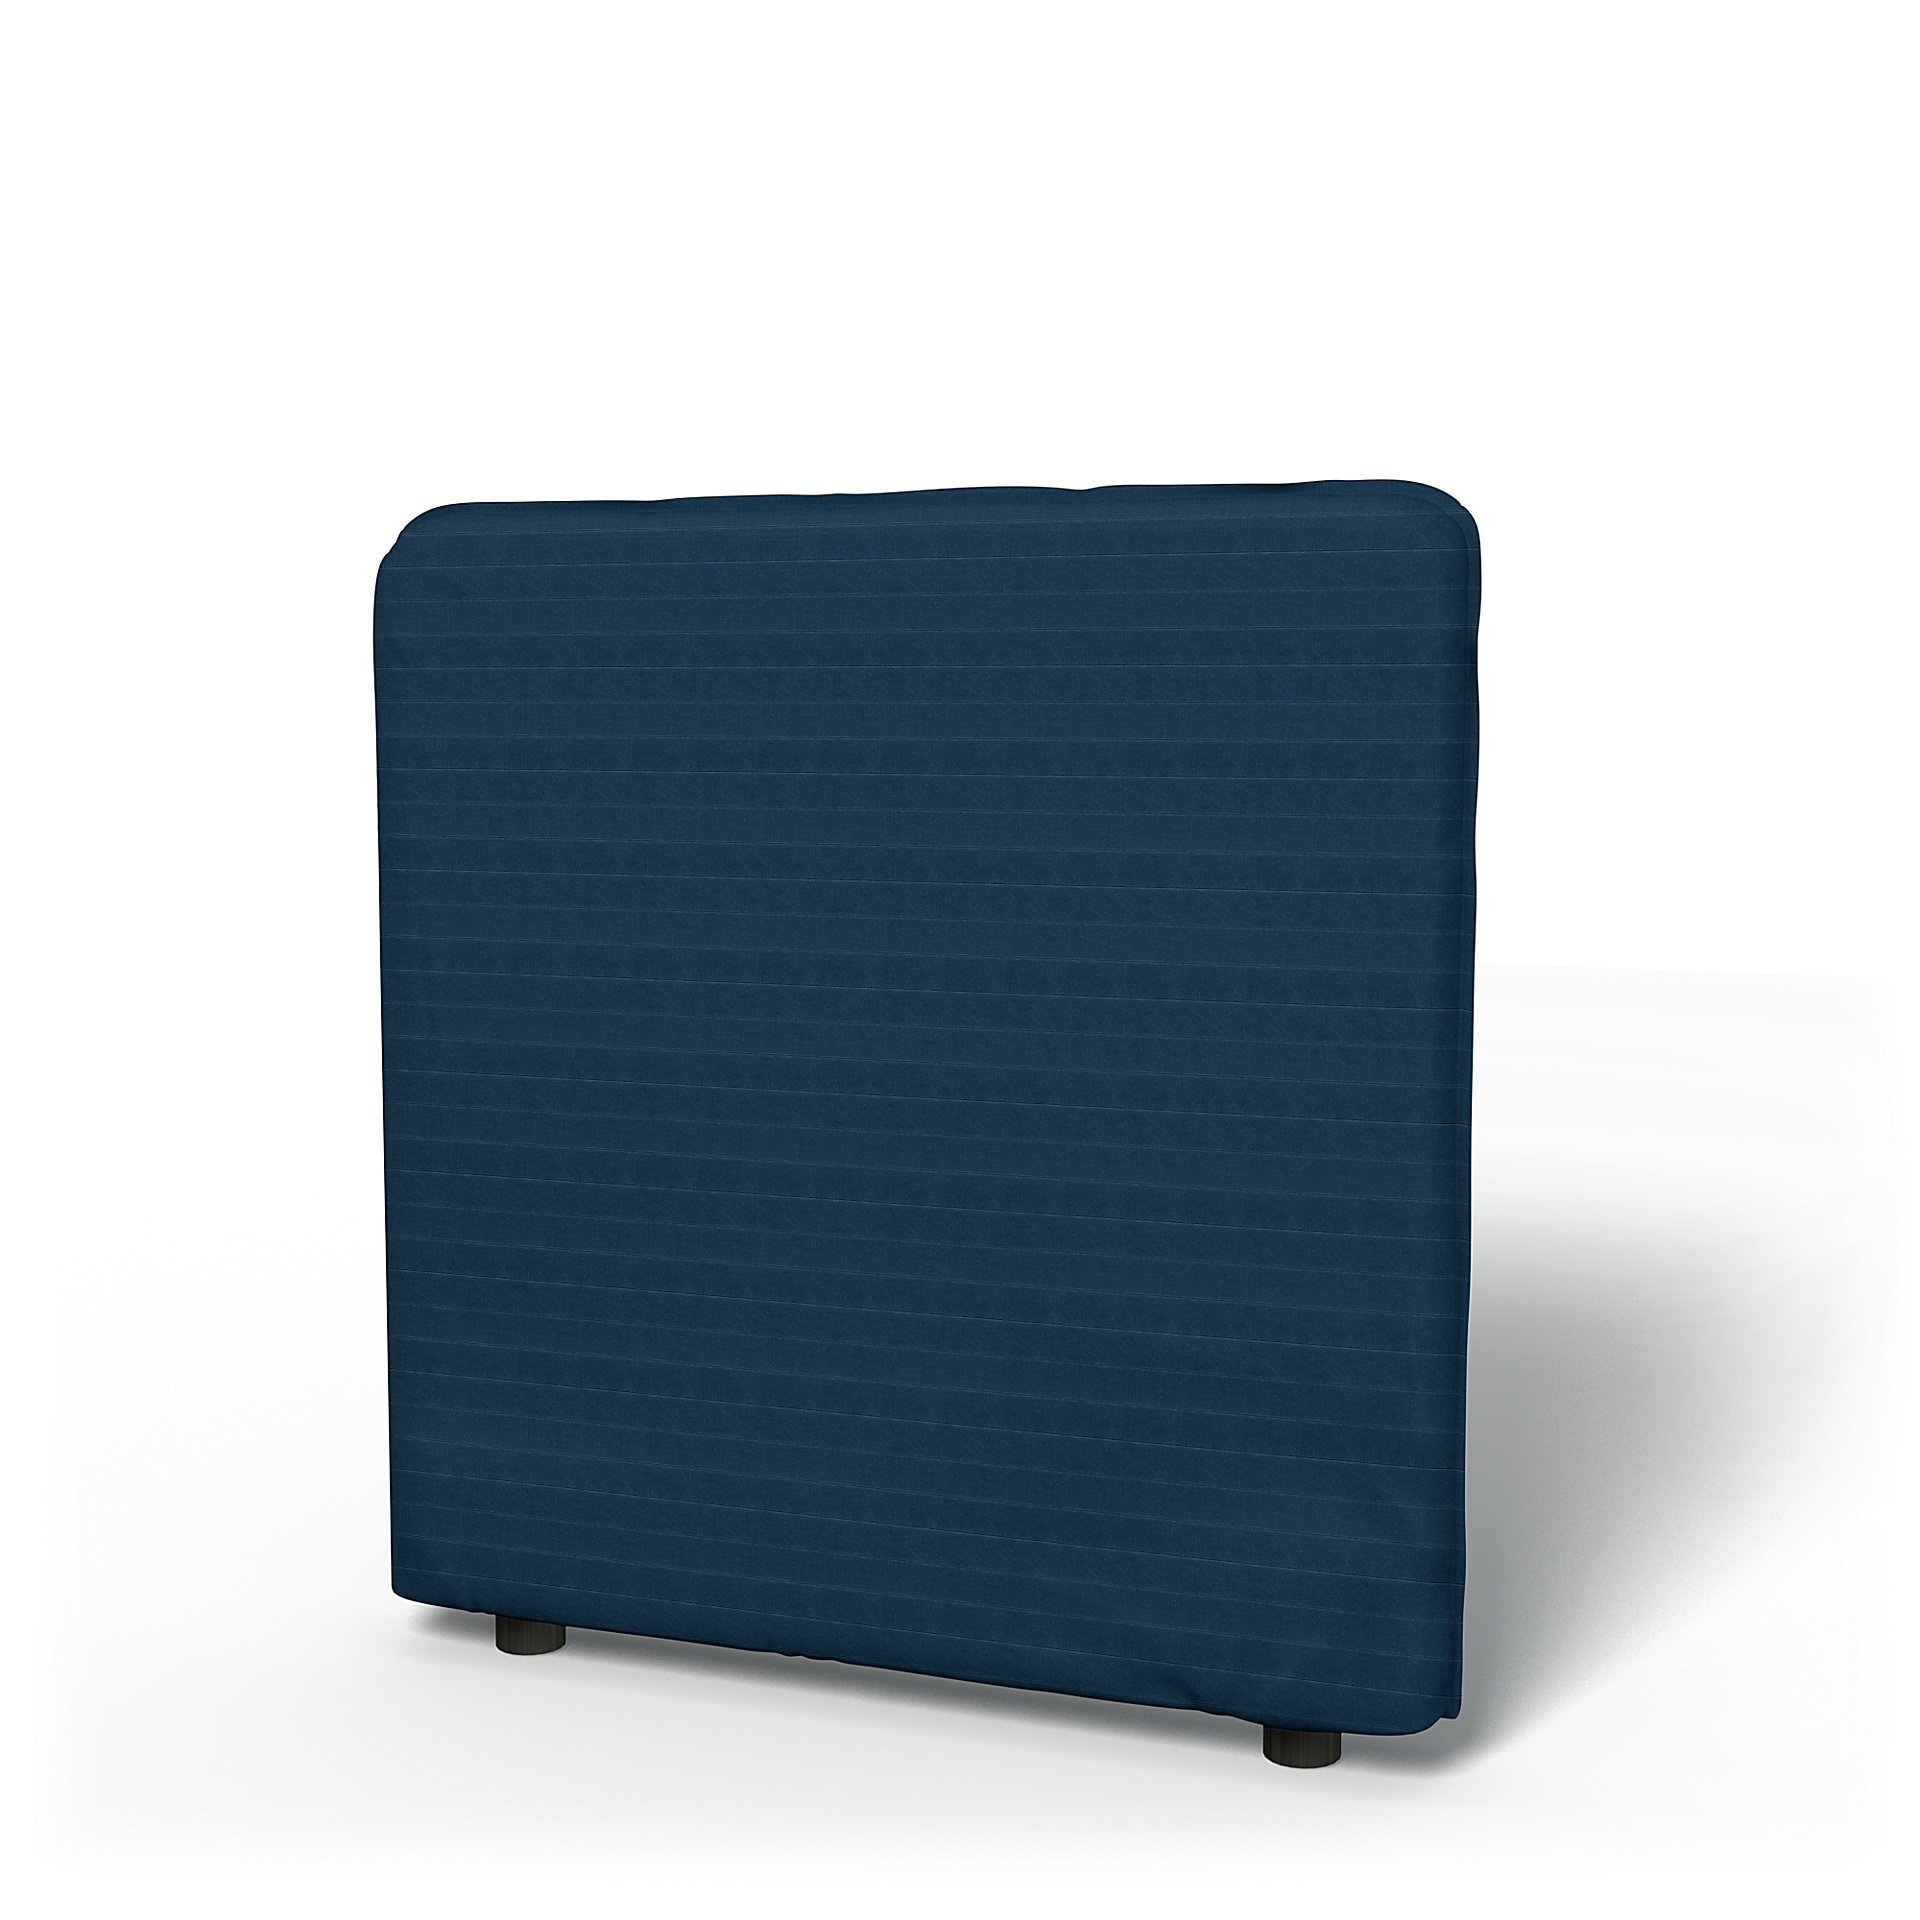 IKEA - Vallentuna Low Backrest Cover 80x80cm 32x32in, Denim Blue, Velvet - Bemz